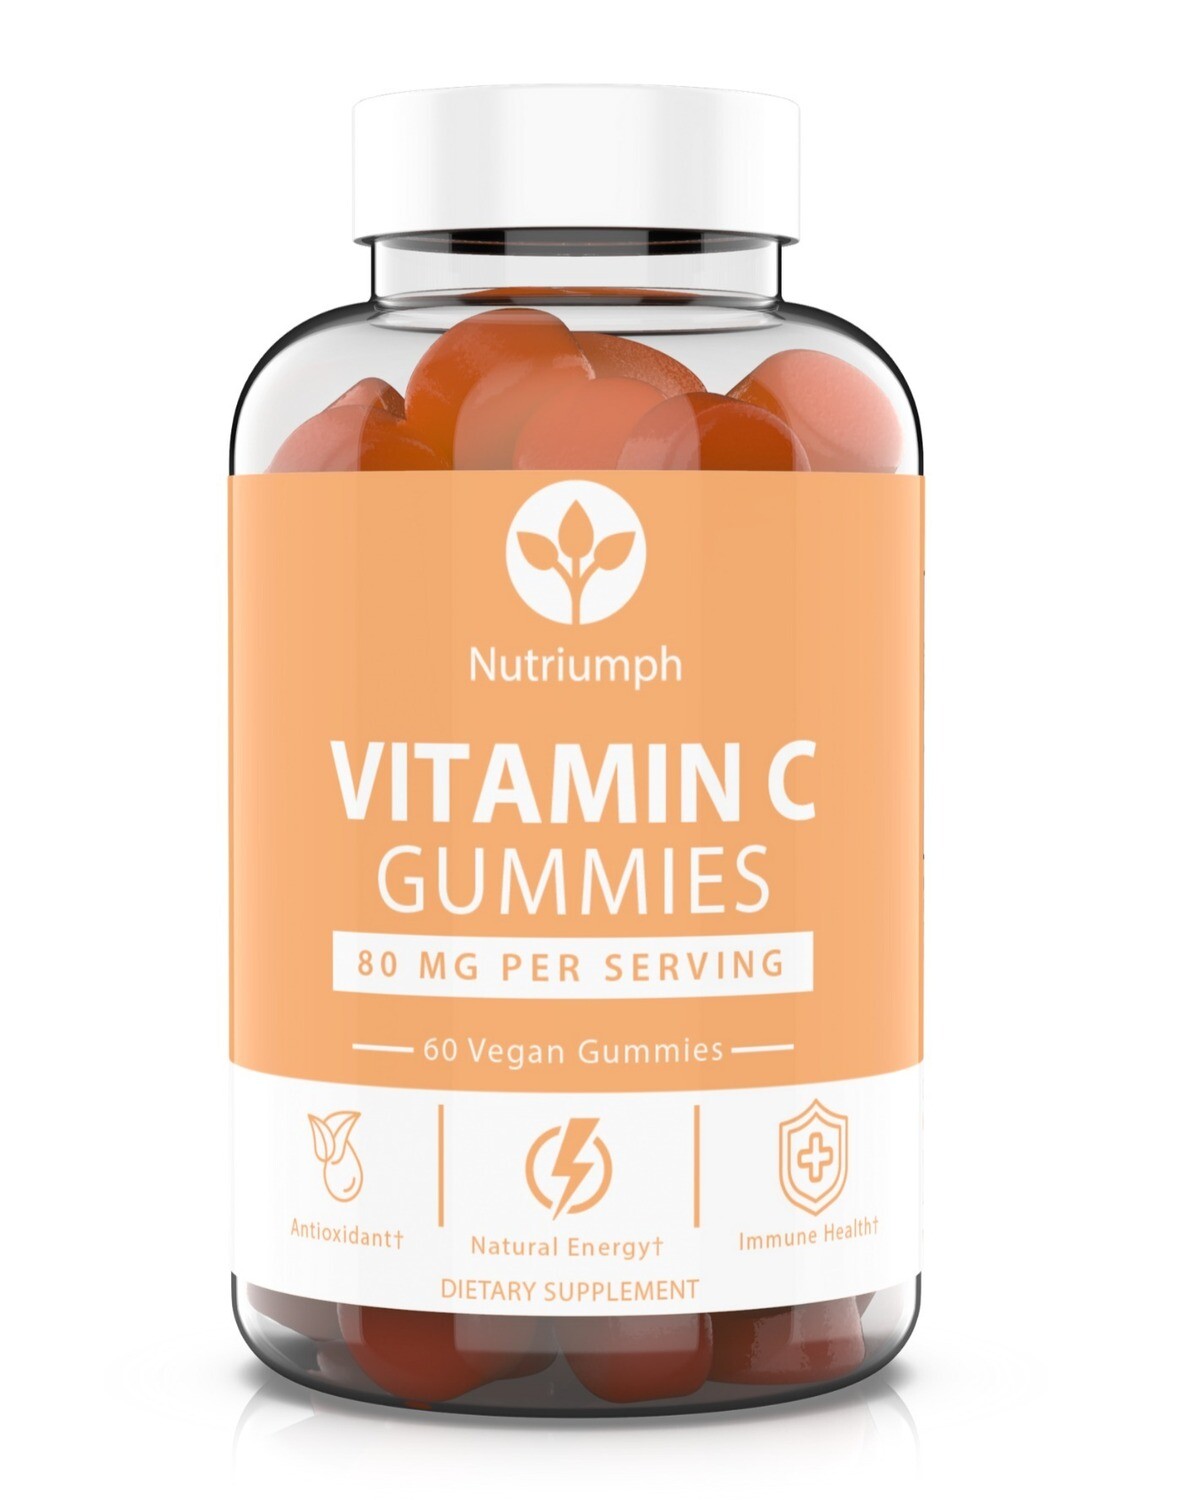 VITAMIN C GUMMIES - Energy & Immune Boosting Vitamins for Kids & Adults